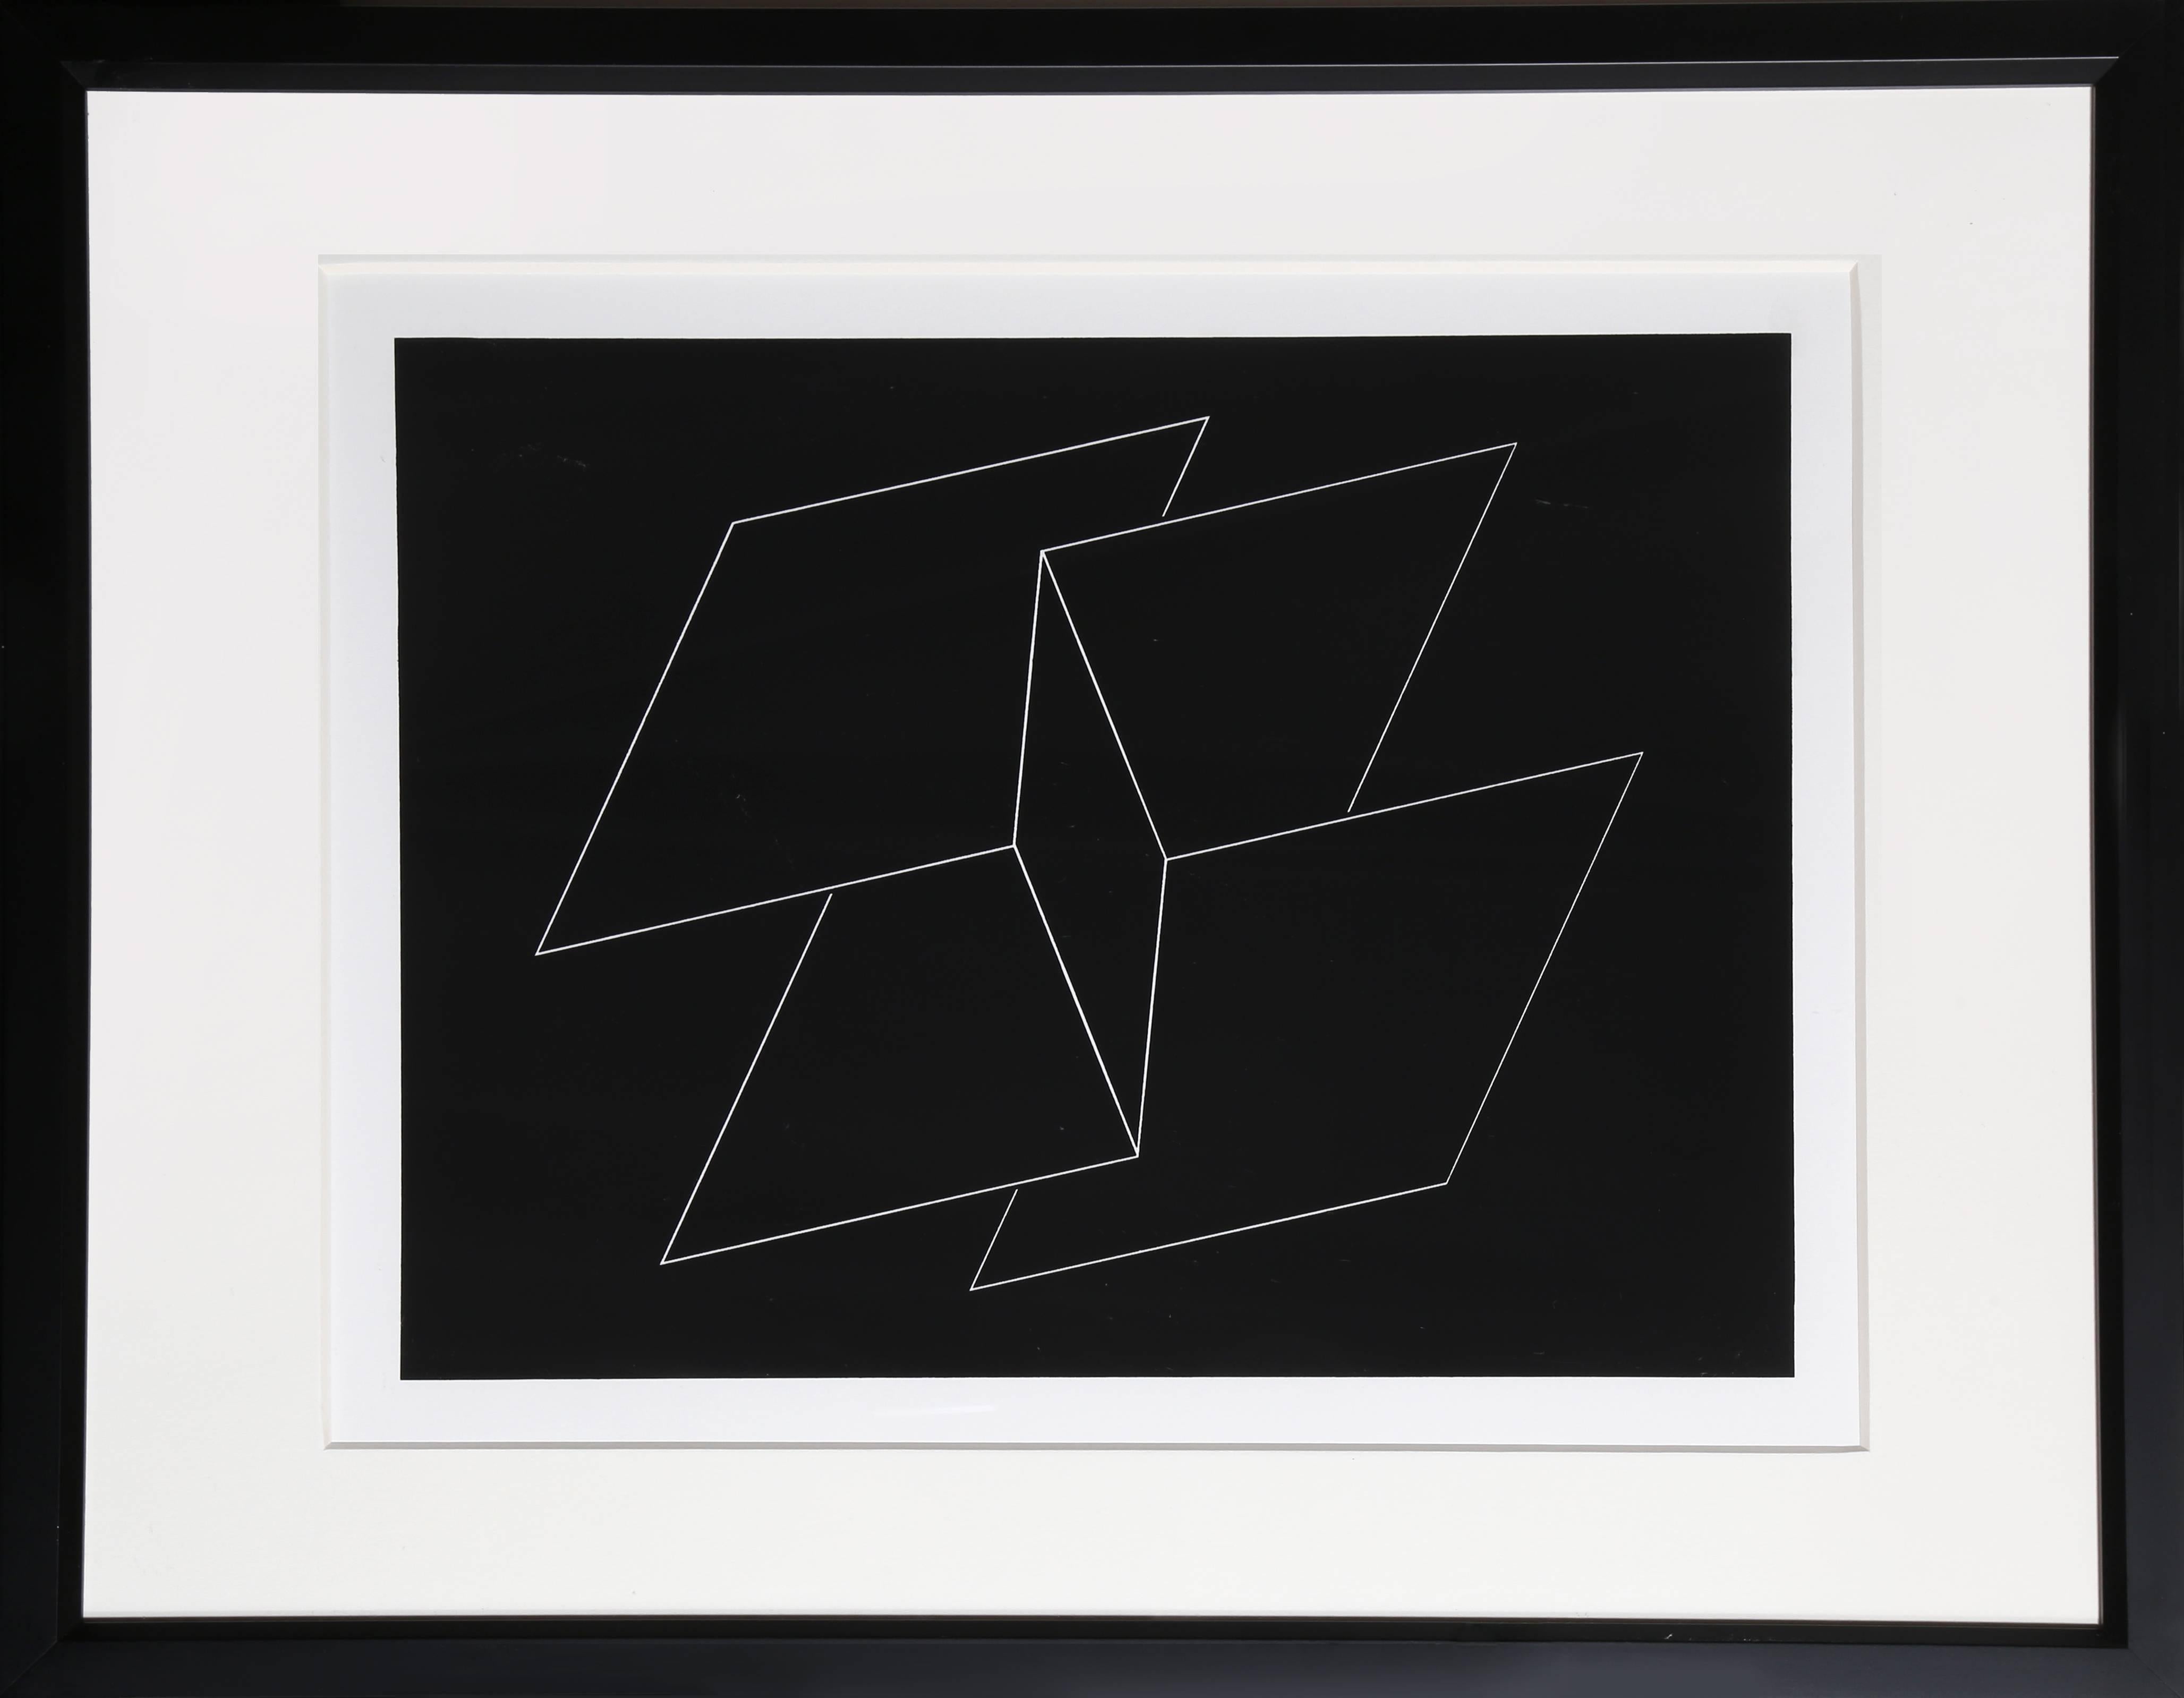 Artist:	Josef Albers, German (1888 - 1976)
Title:	Portfolio 2, Folder 10, Image 2 from Formulation: Articulation (Double Portfolio)
Year:	1972
Medium:	Silkscreen
Edition:	1000
Paper Size:	15 x 20 inches [38.1 x 50.8 cm] 
Frame:  19.5 x 24.5